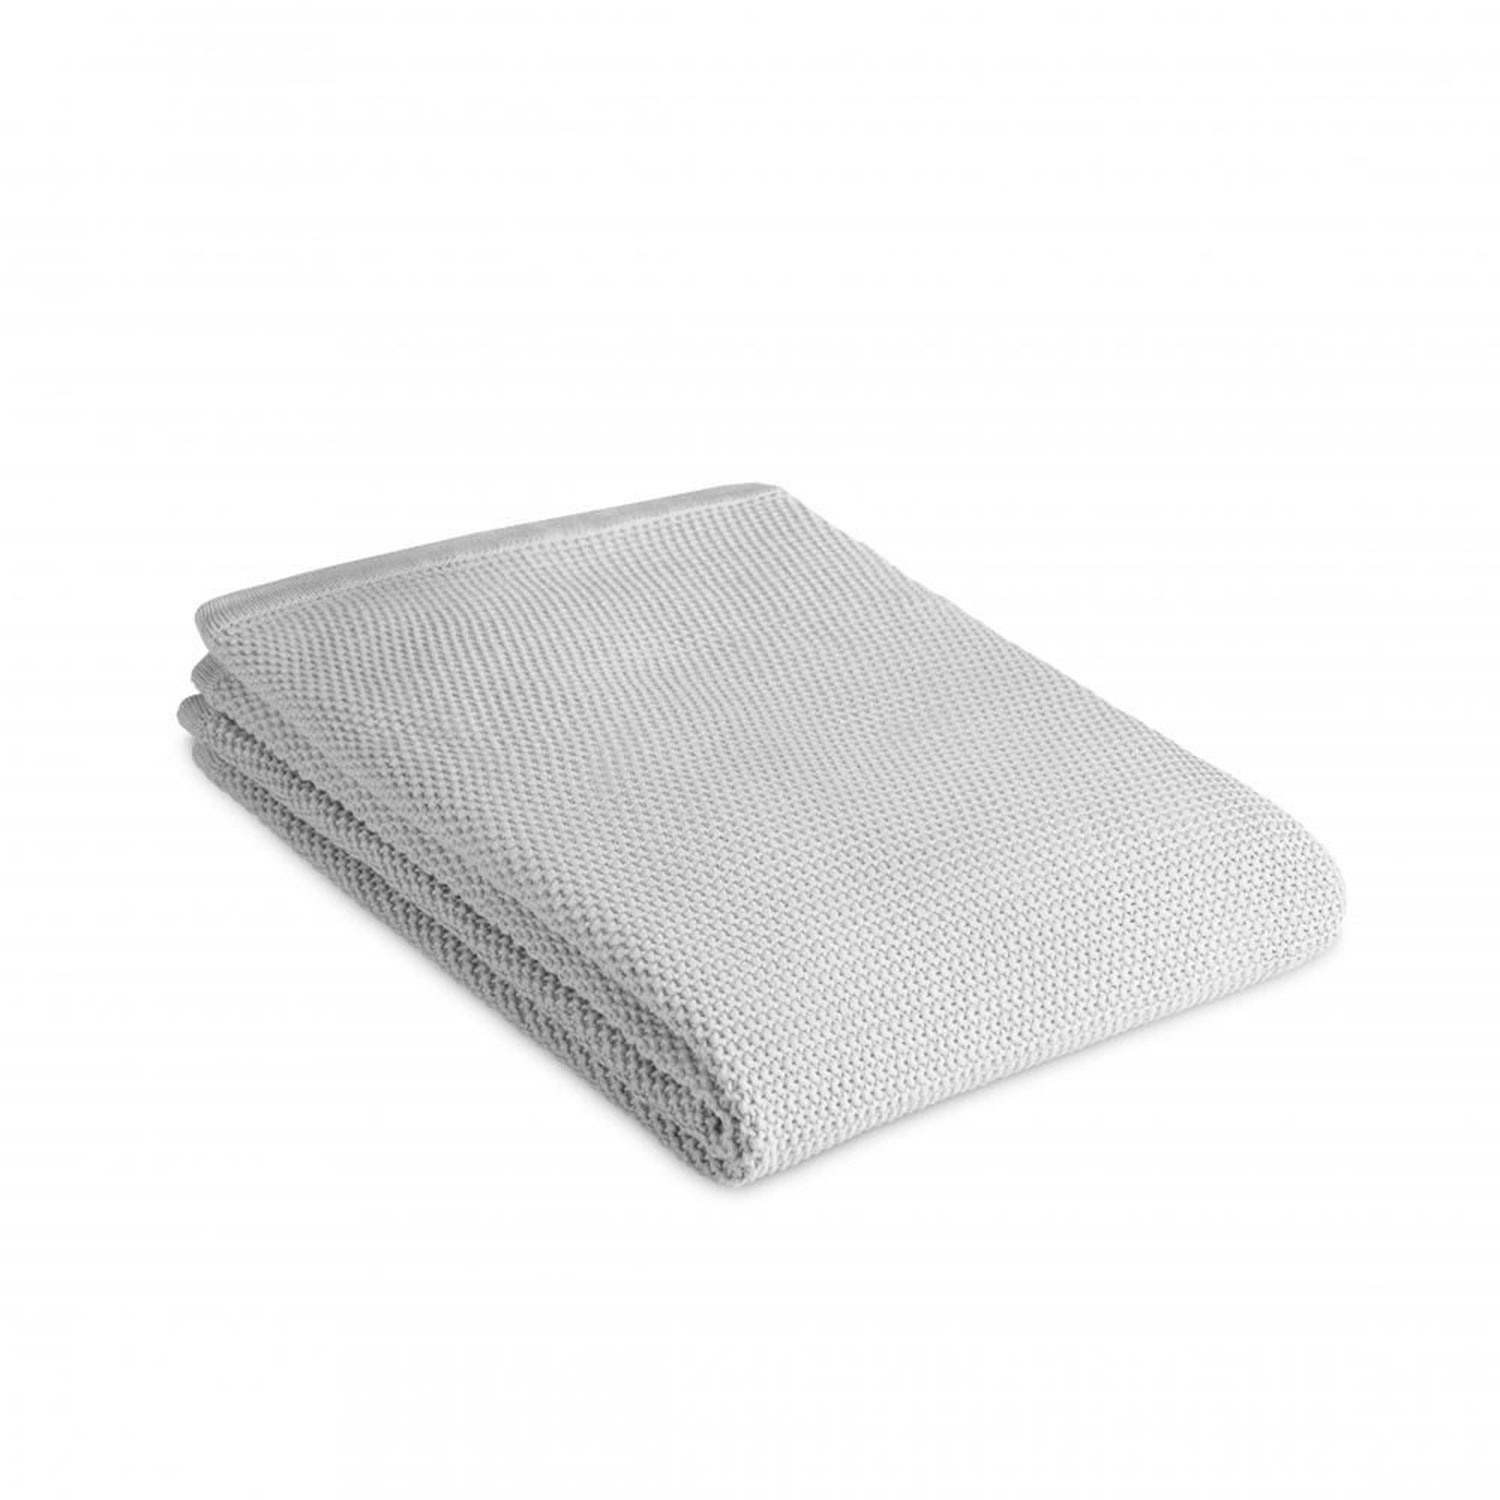 Купить Одеяло CYBEX KOI для коляски PRIAM, 110*85 см, Нет цвета, см.на упаковке